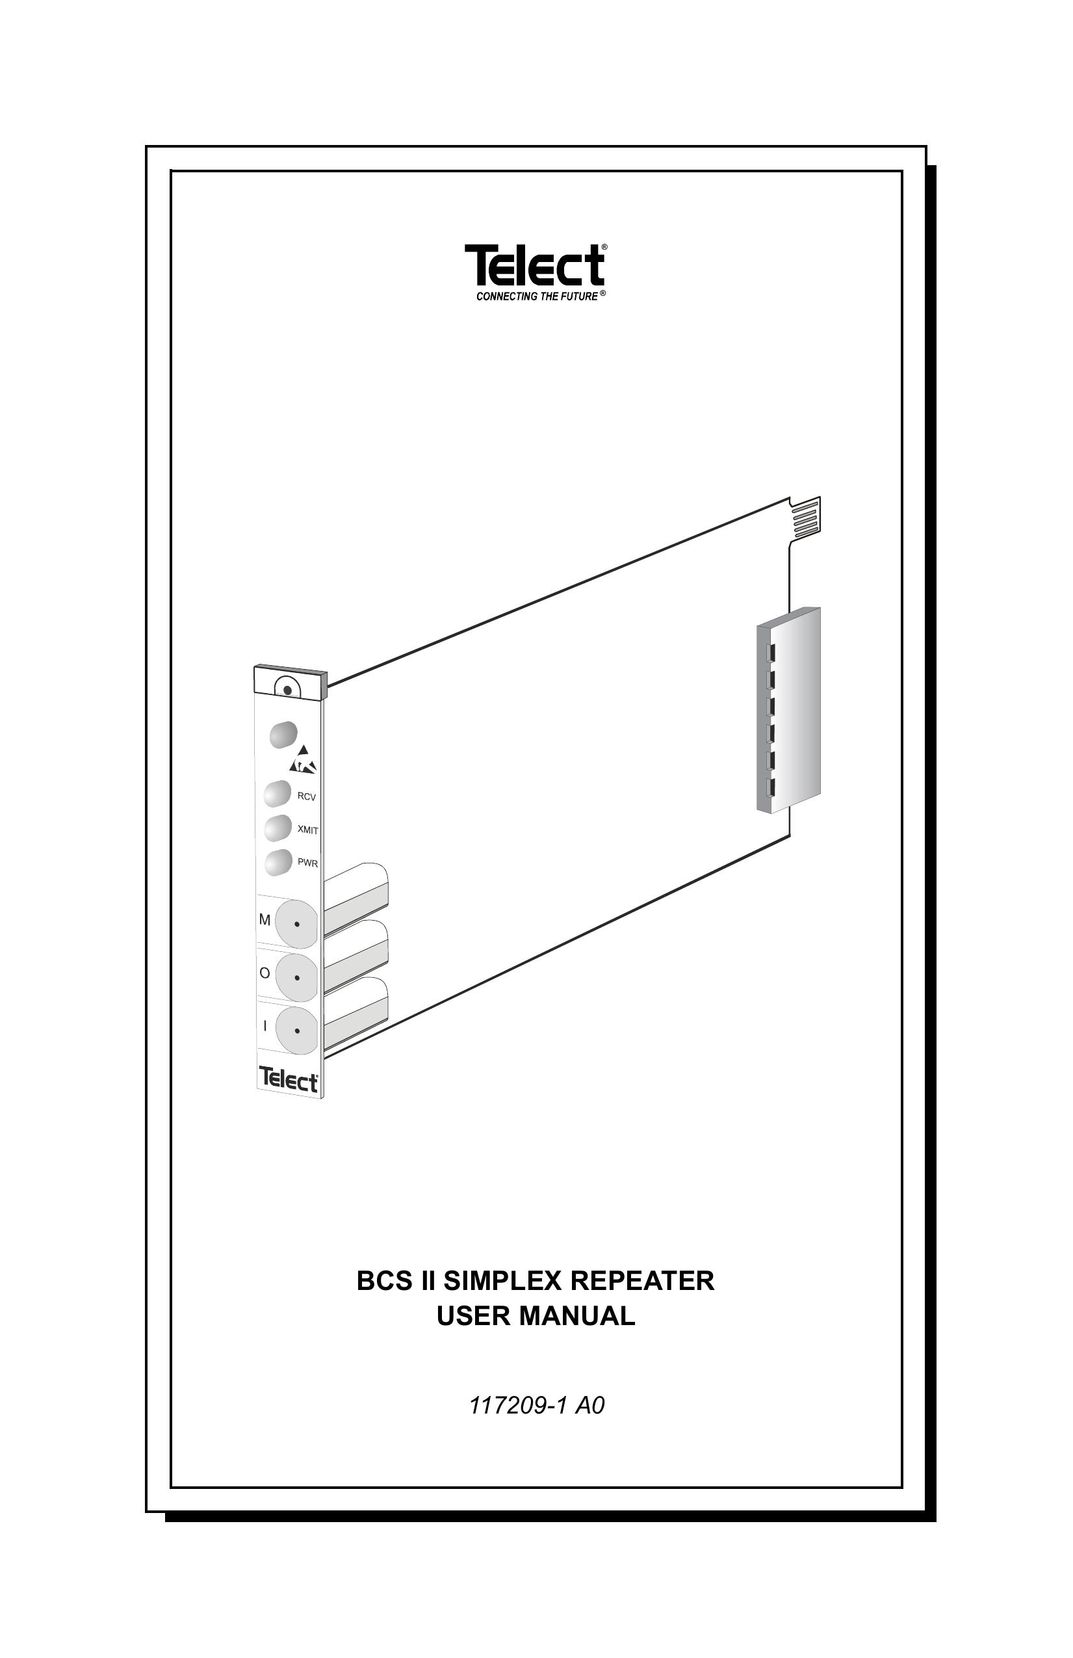 Telect BCS II Network Card User Manual